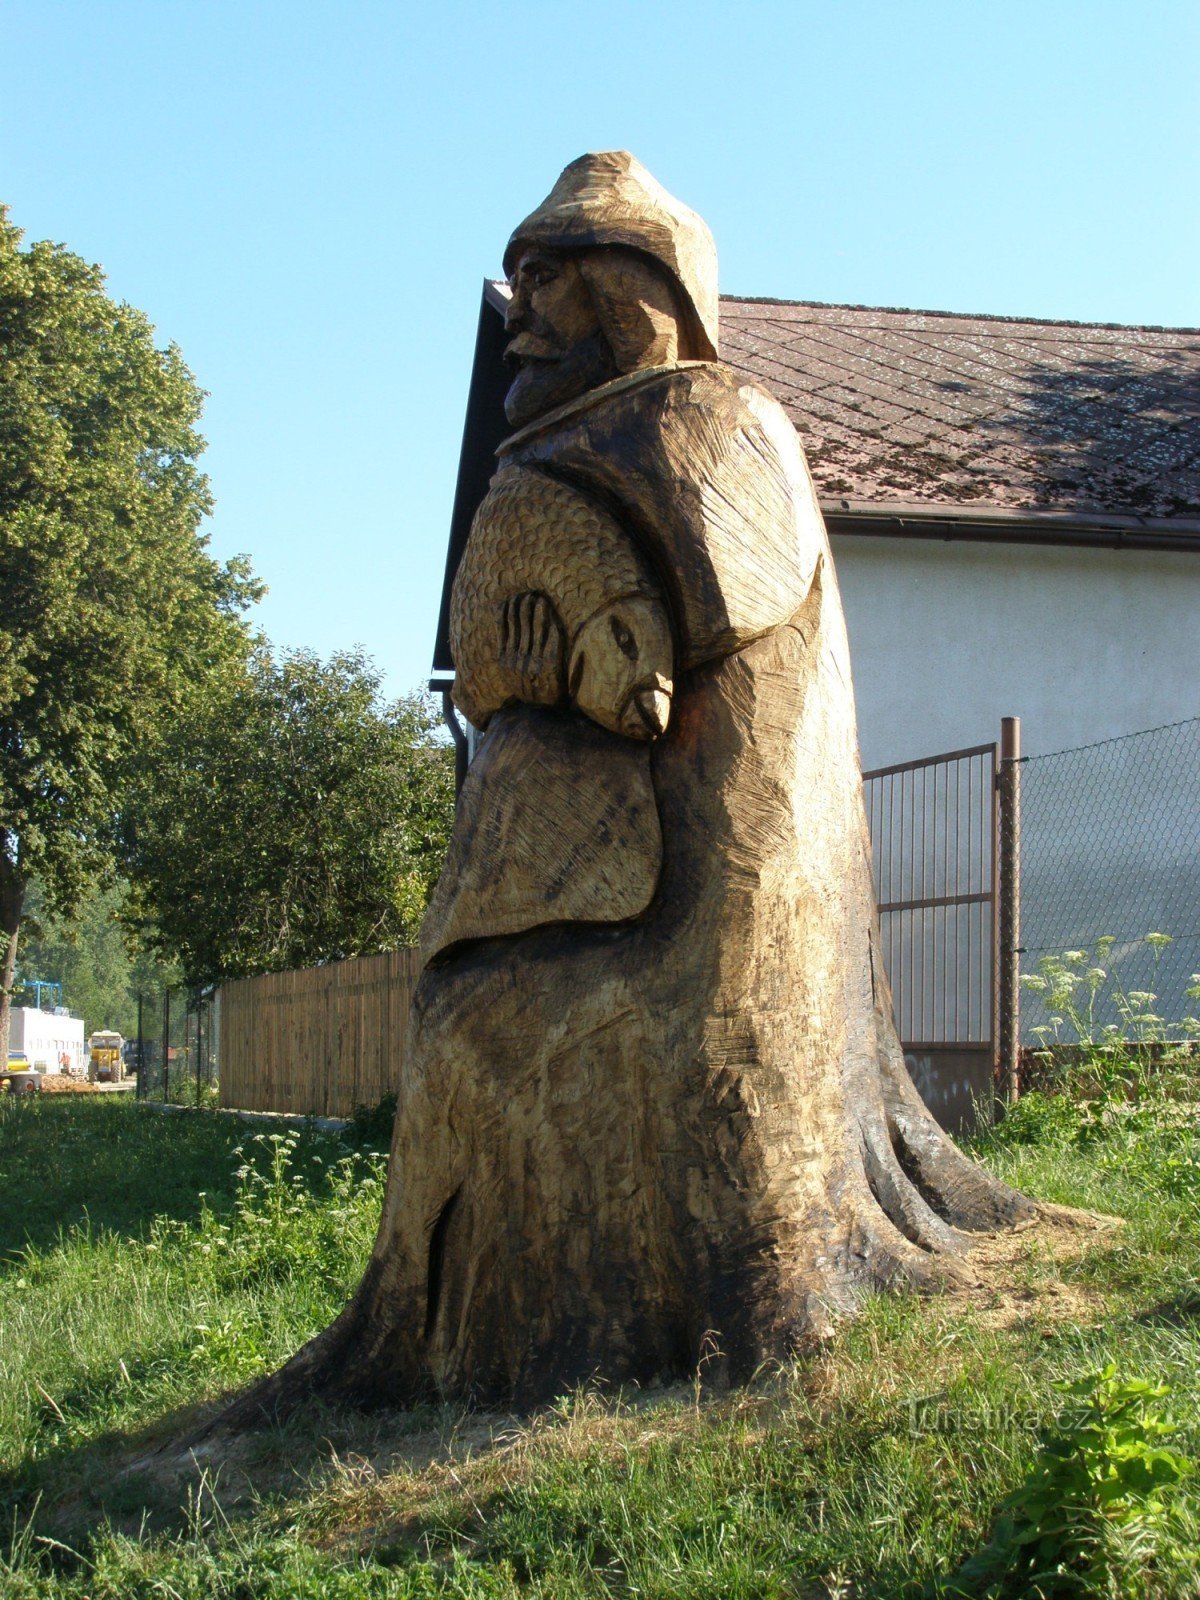 Jičín - sculture di alberi